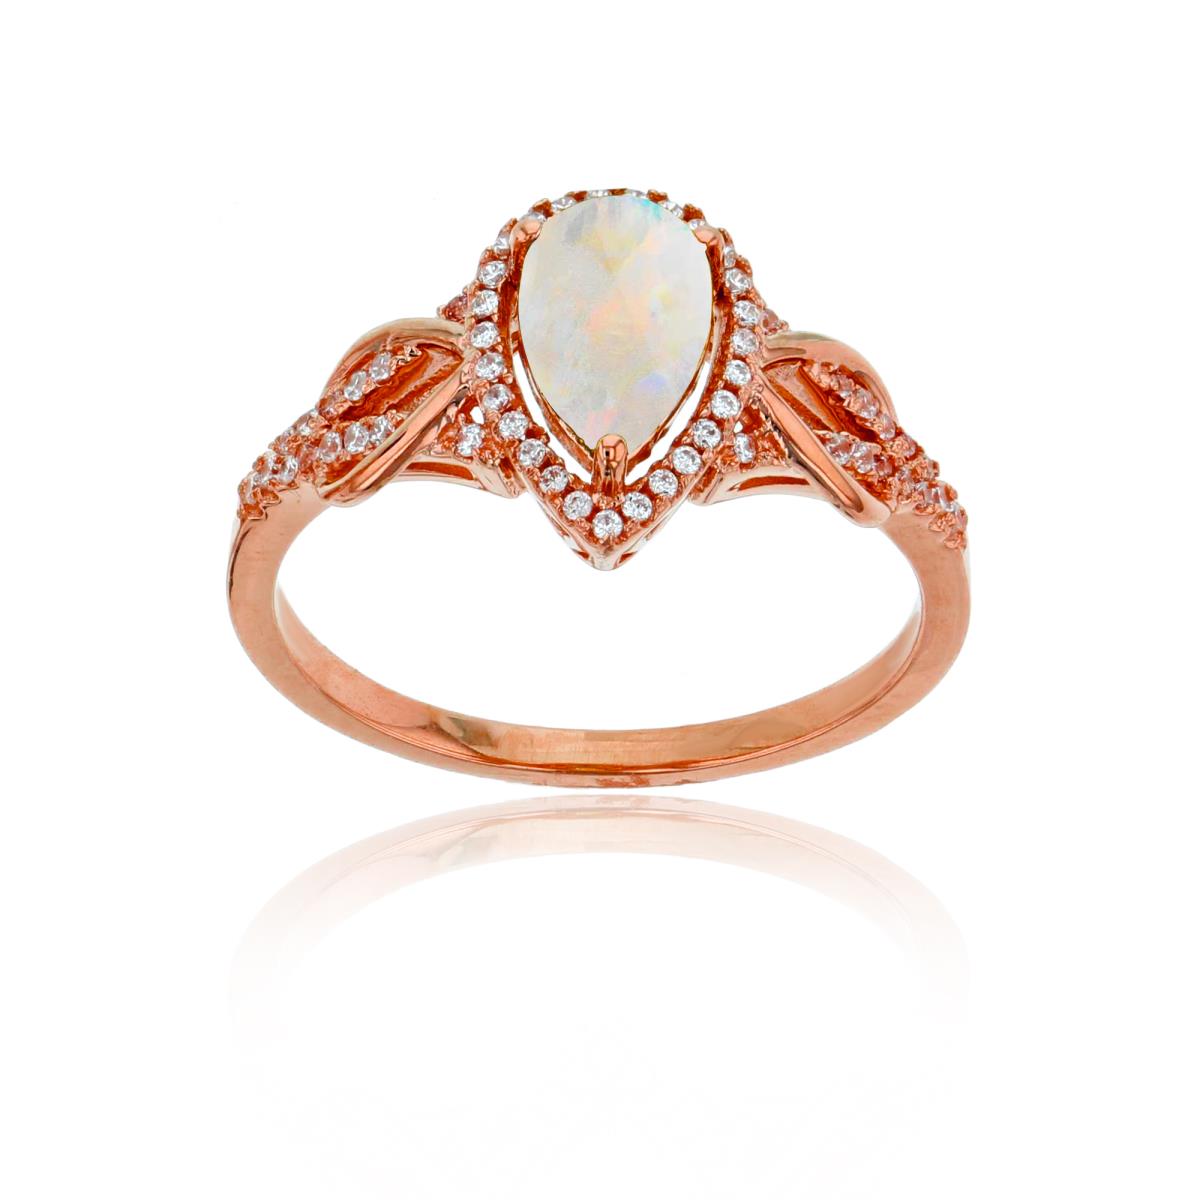 10K Rose Gold 0.17CTTW Rnd Diamond & 8x5mm Pear Cut Opal Knot Sides Ring